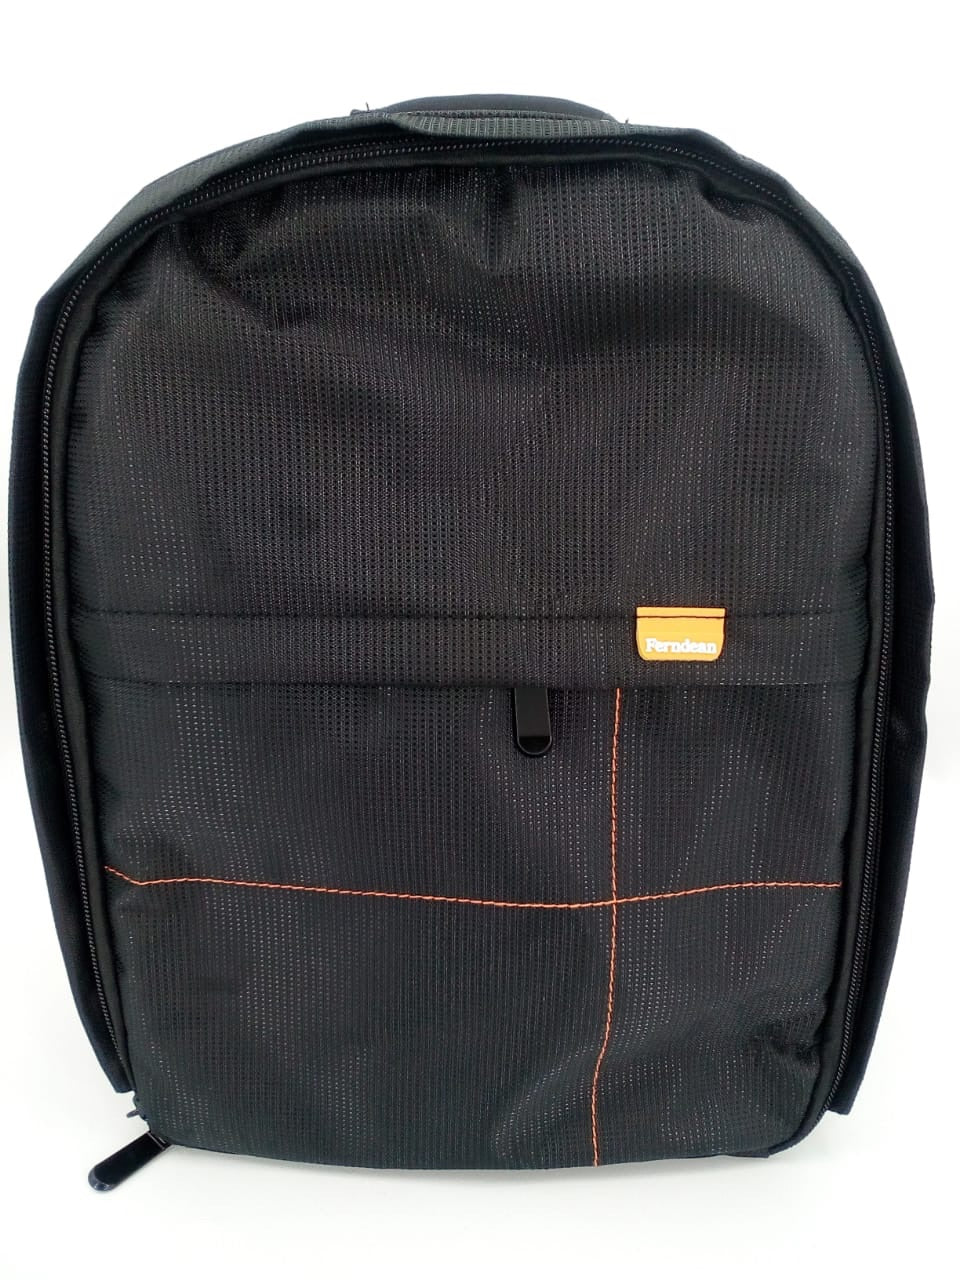 WP 02 mochila reforzada para proteger cámara fotográfica anaranjada